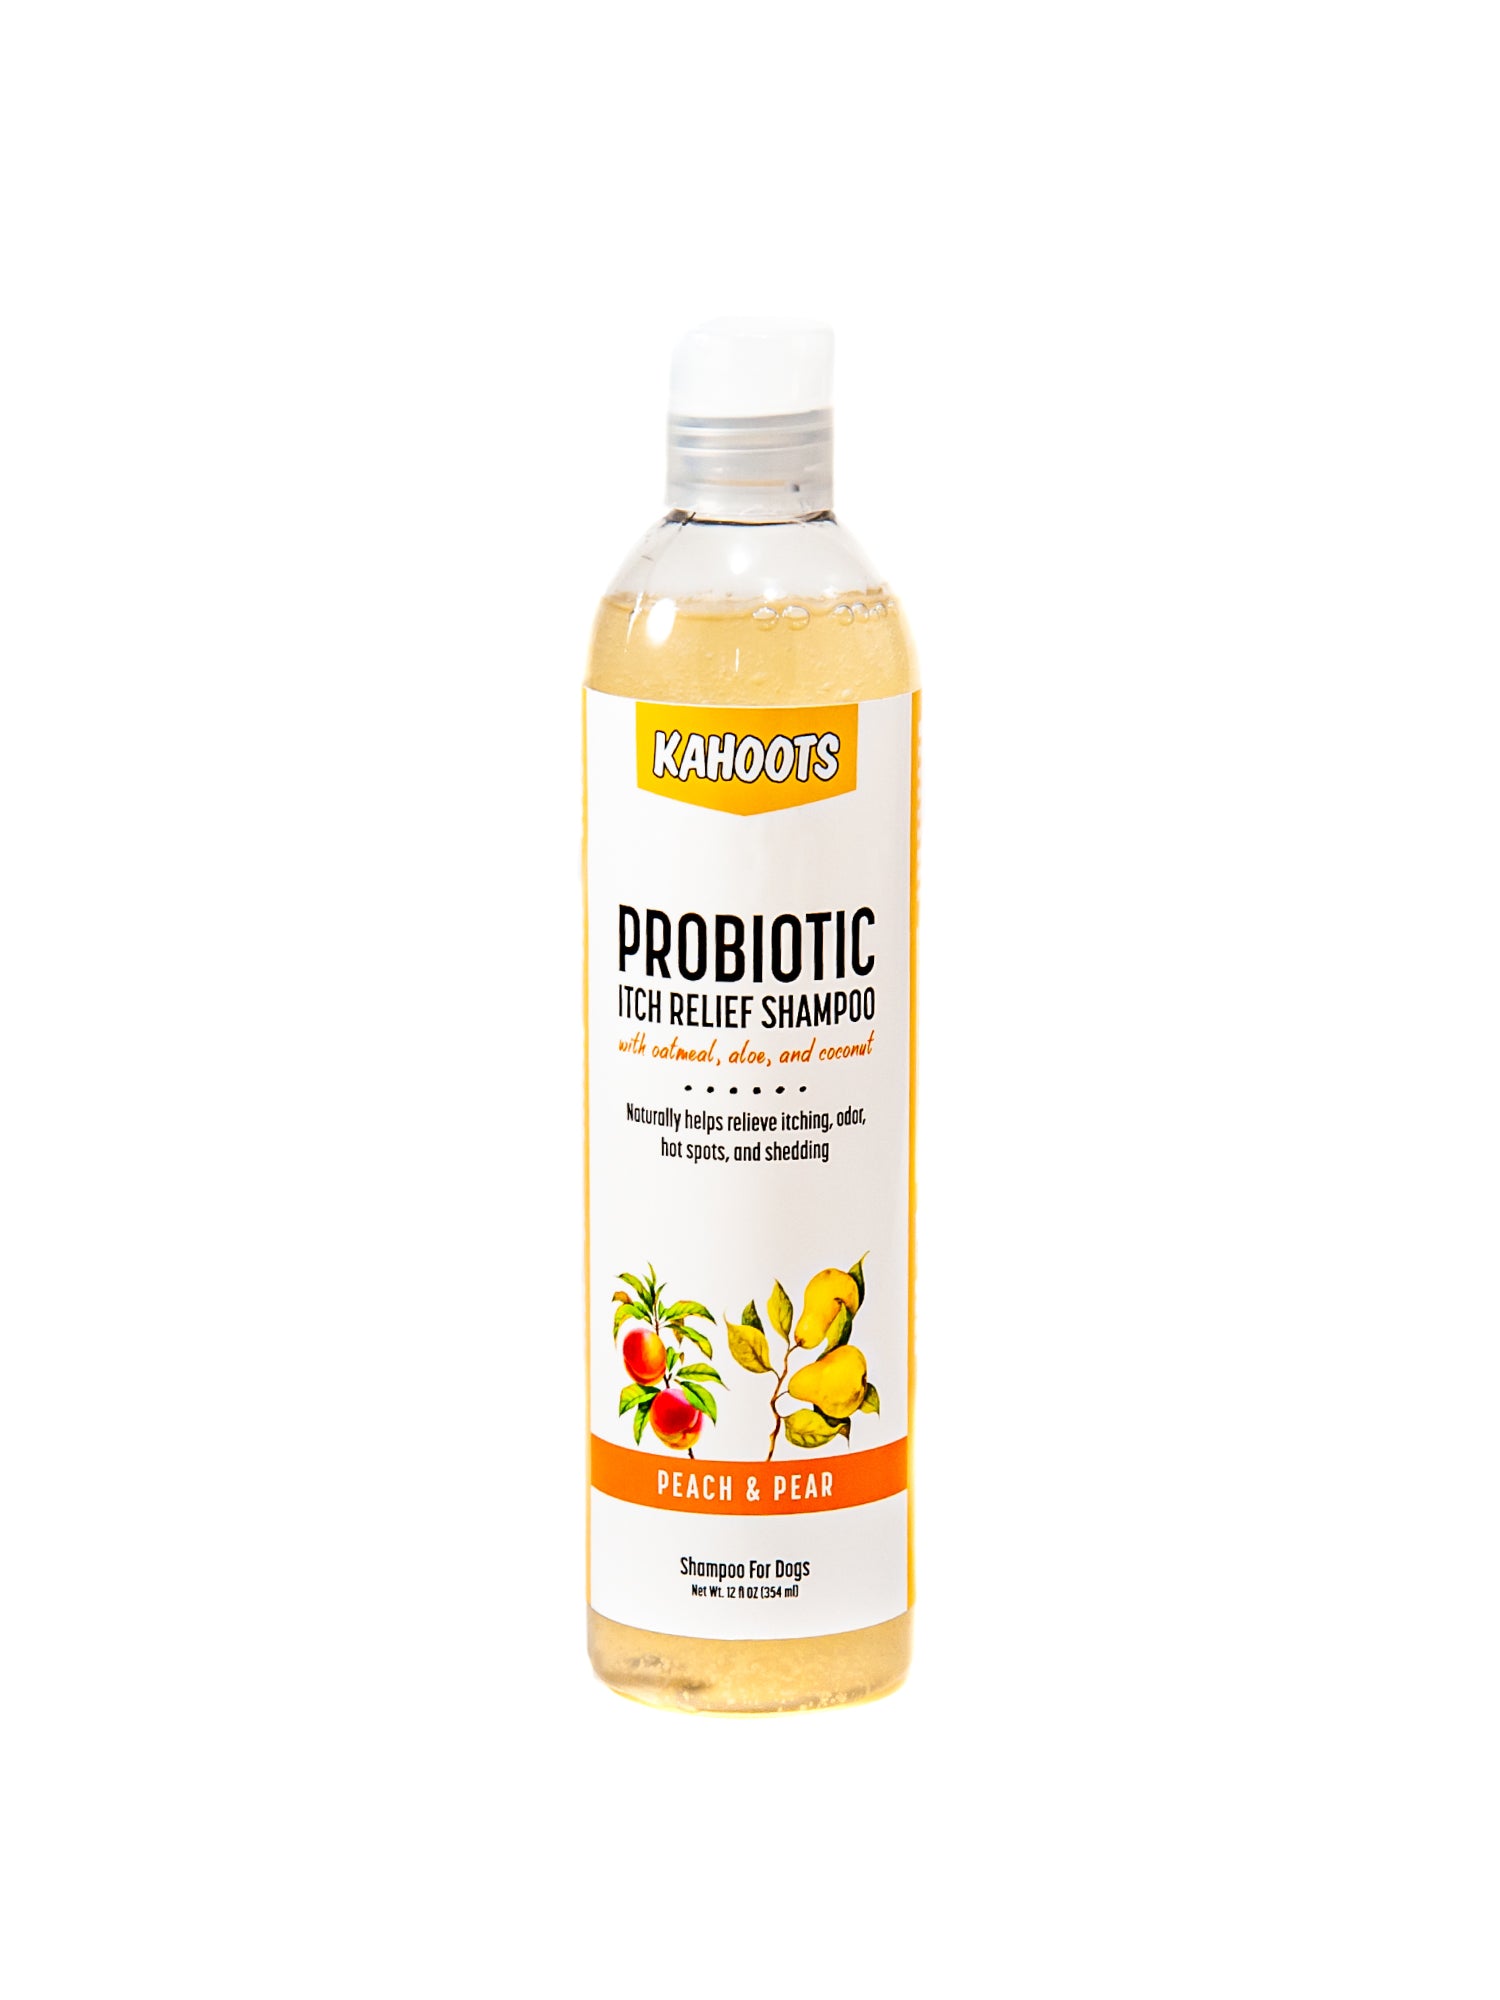 Probiotic Itch Relief Shampoo - Pet Supplies - Kahoots and Pet